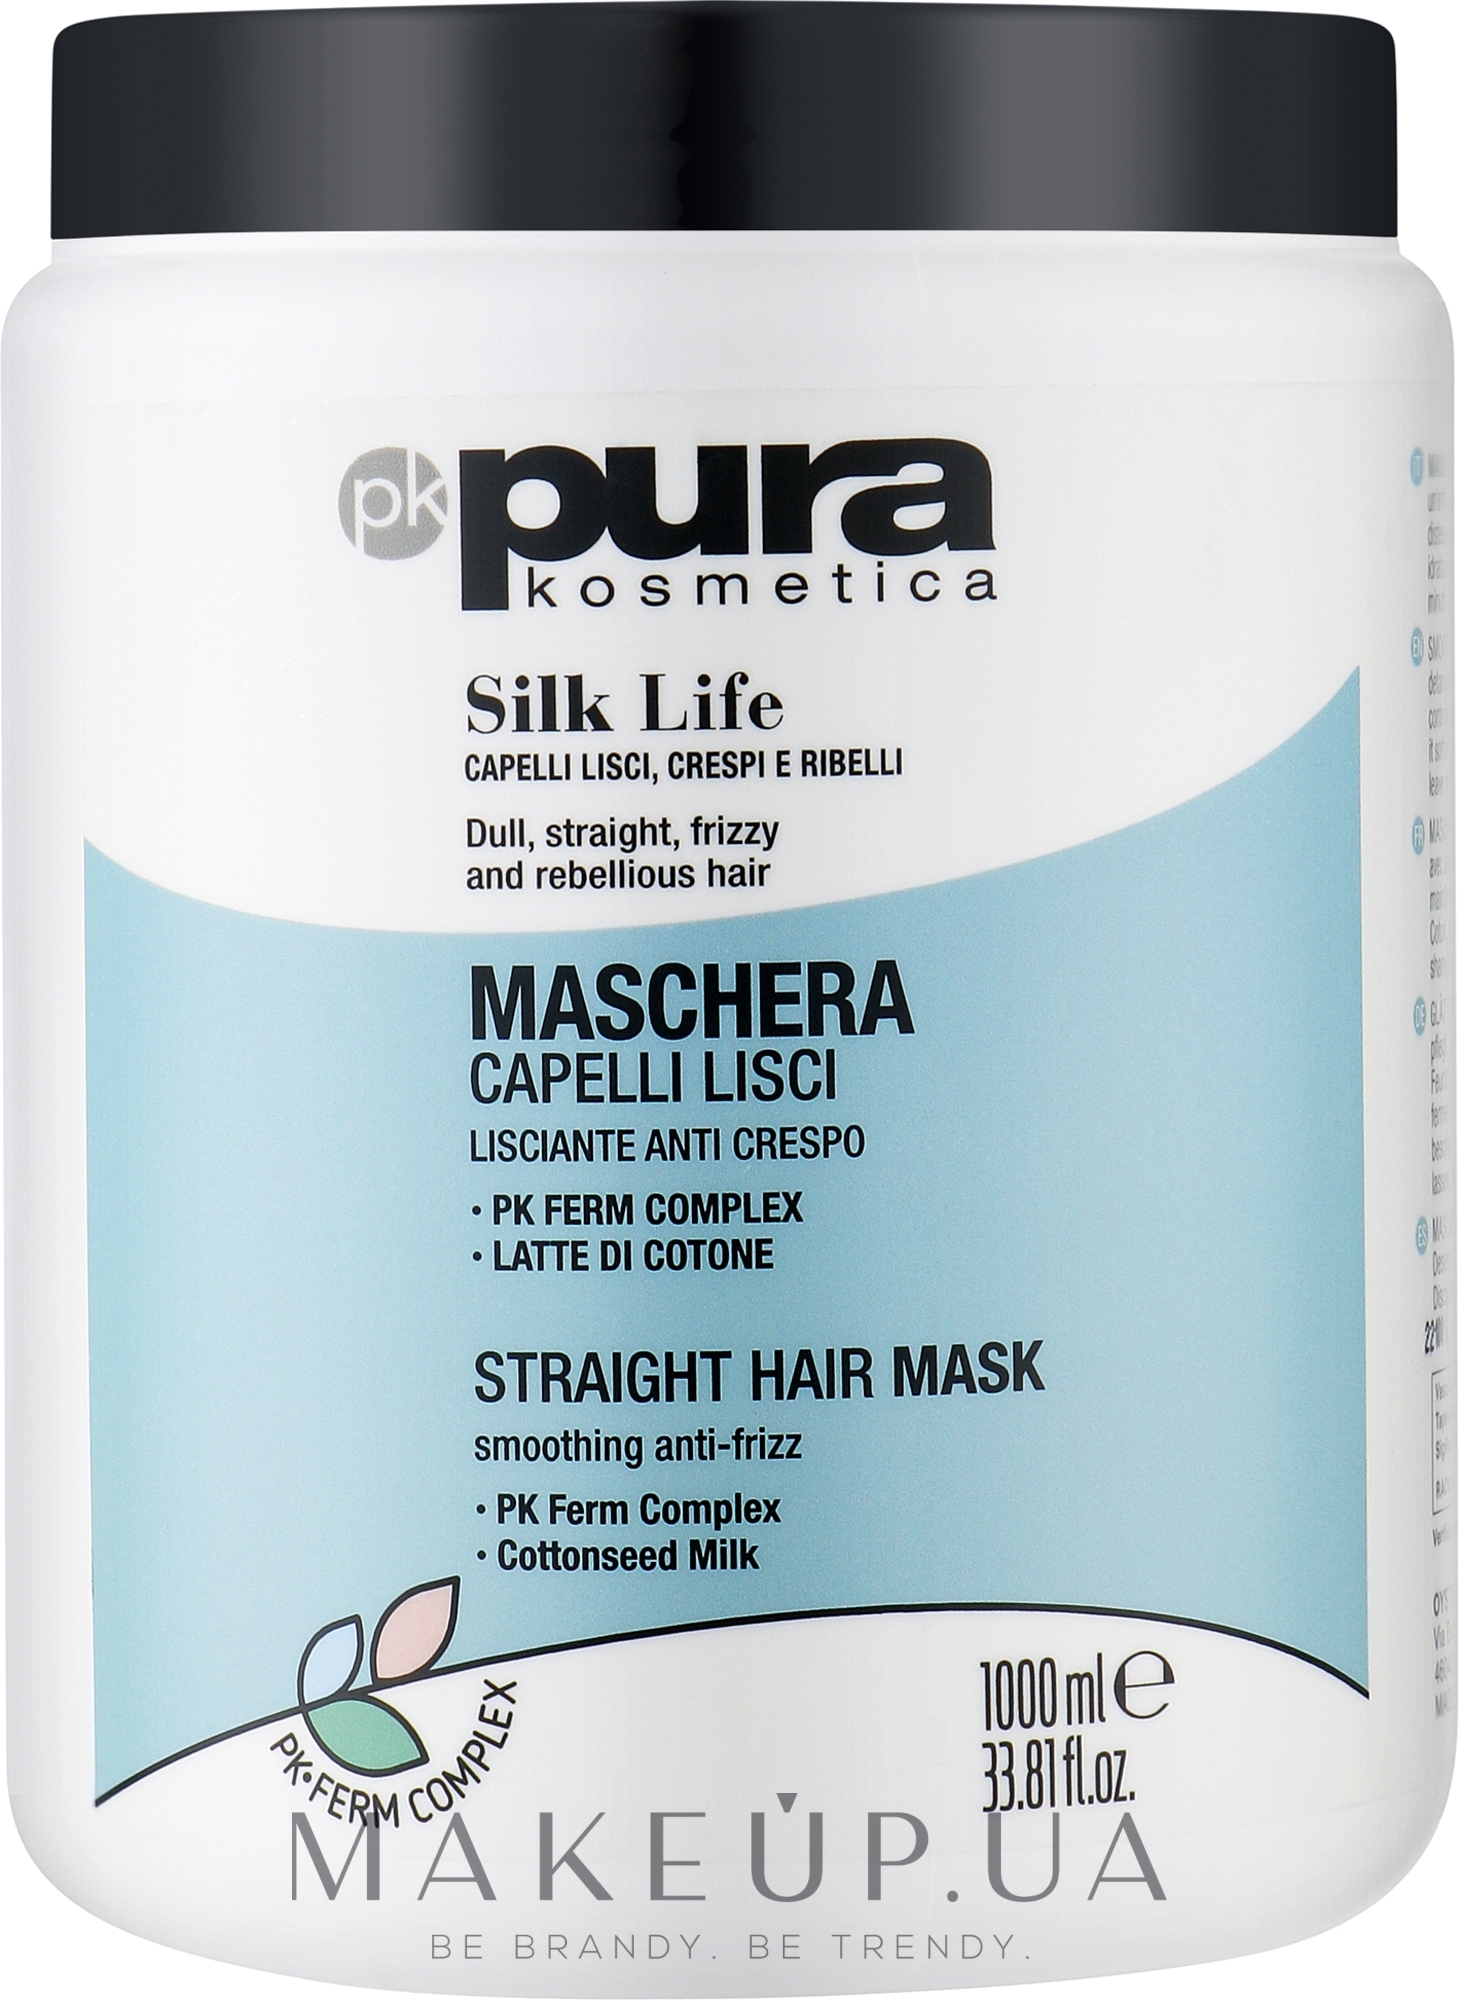 Маска для волос - Pura Kosmetica Silk Life Mask — фото 1000ml